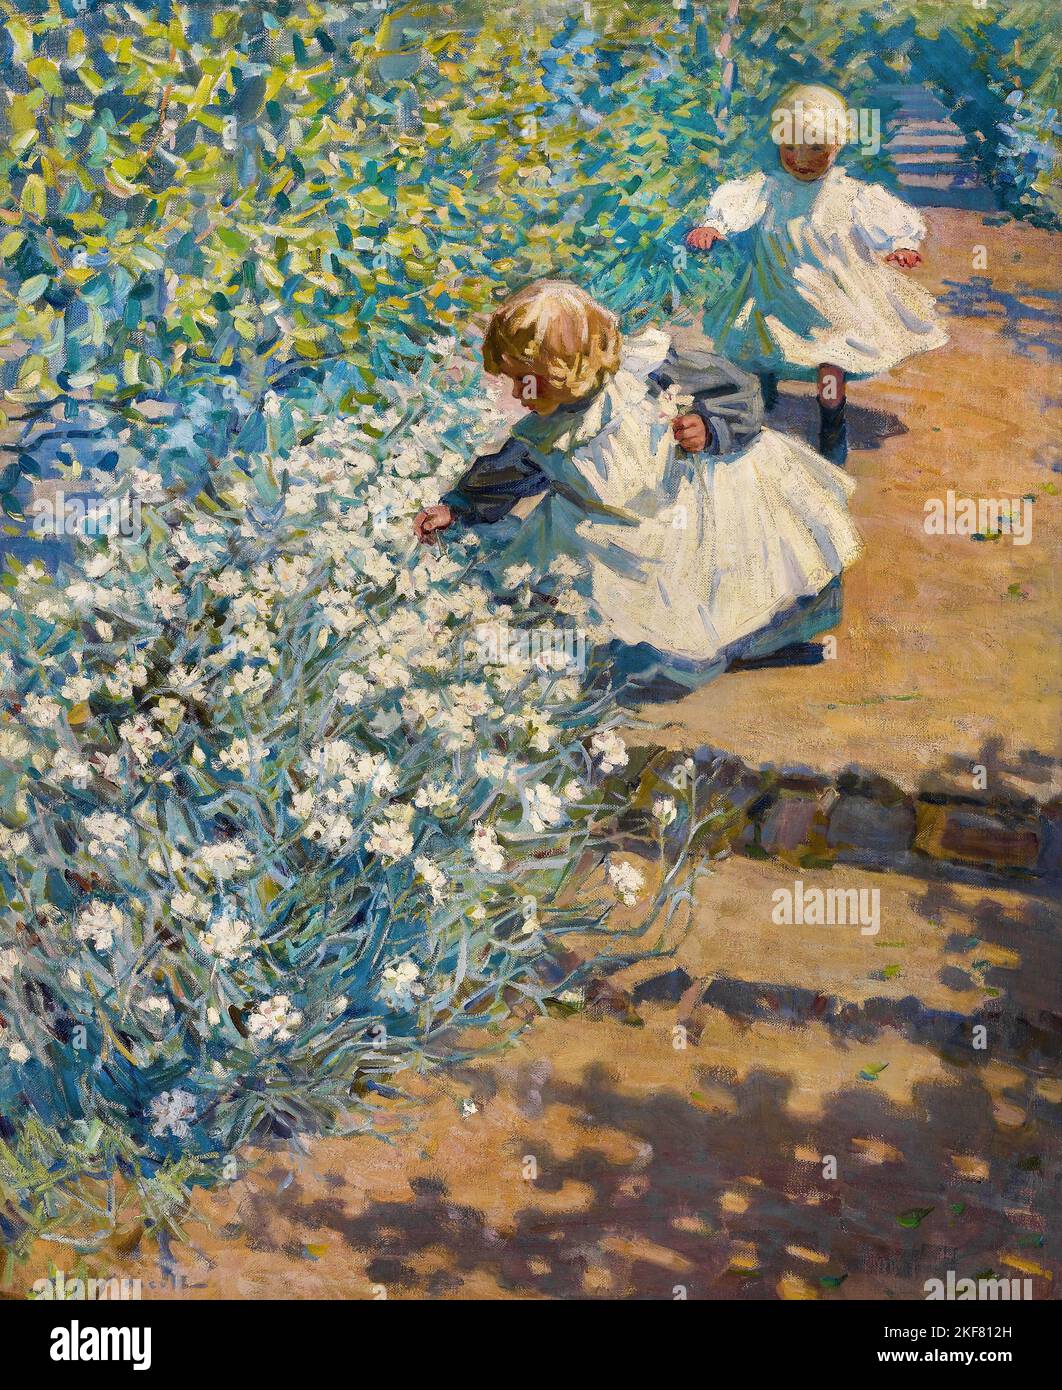 Helen McNicoll; Picking Flowers; Circa 1907-1917; Oil on canvas; Art Gallery of Ontario, Toronto, Canada. Stock Photo